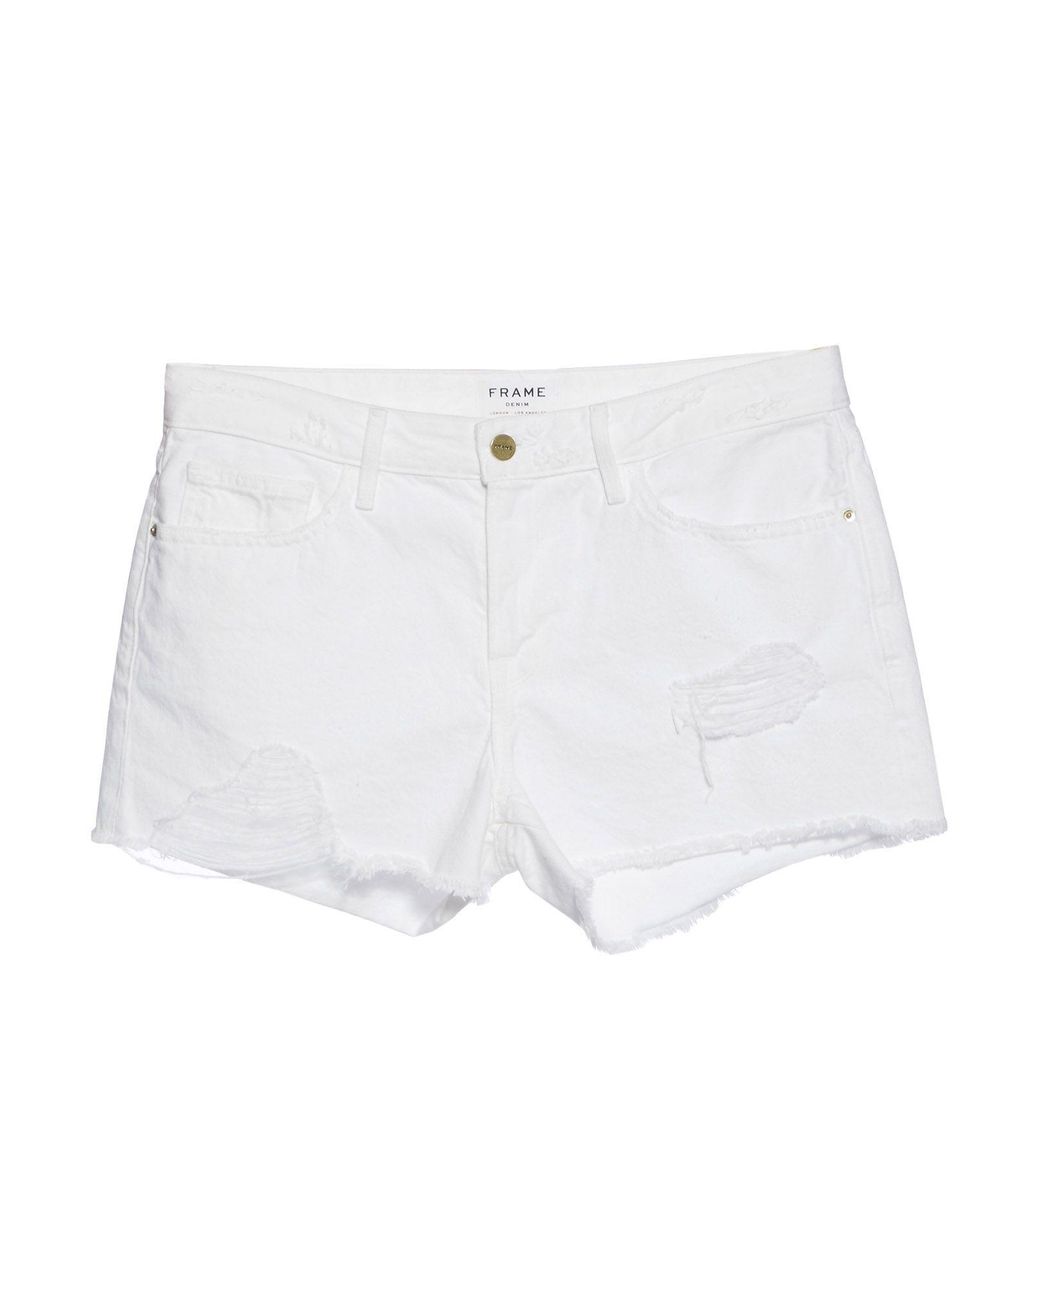 FRAME Denim Shorts in White - Lyst